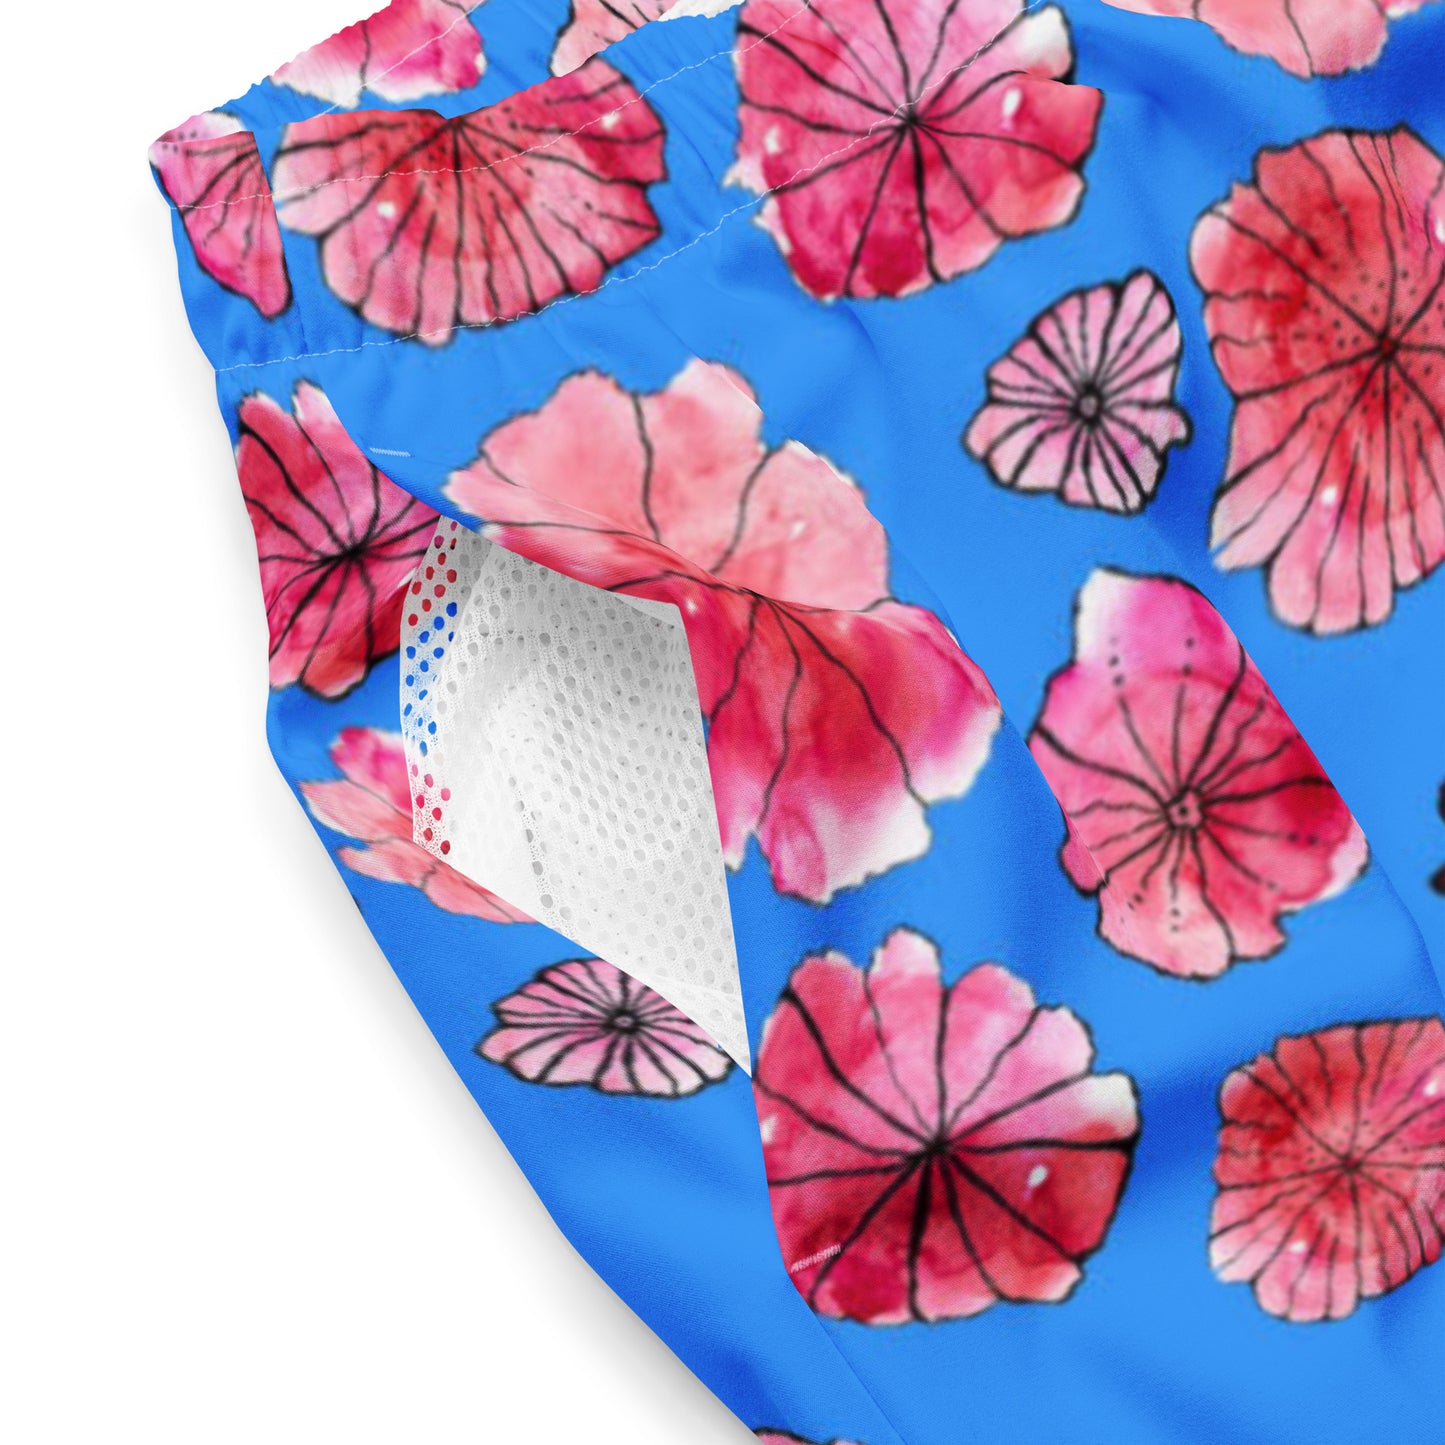 Humble Sportswear, men's activewear floral blue beach swim trunks